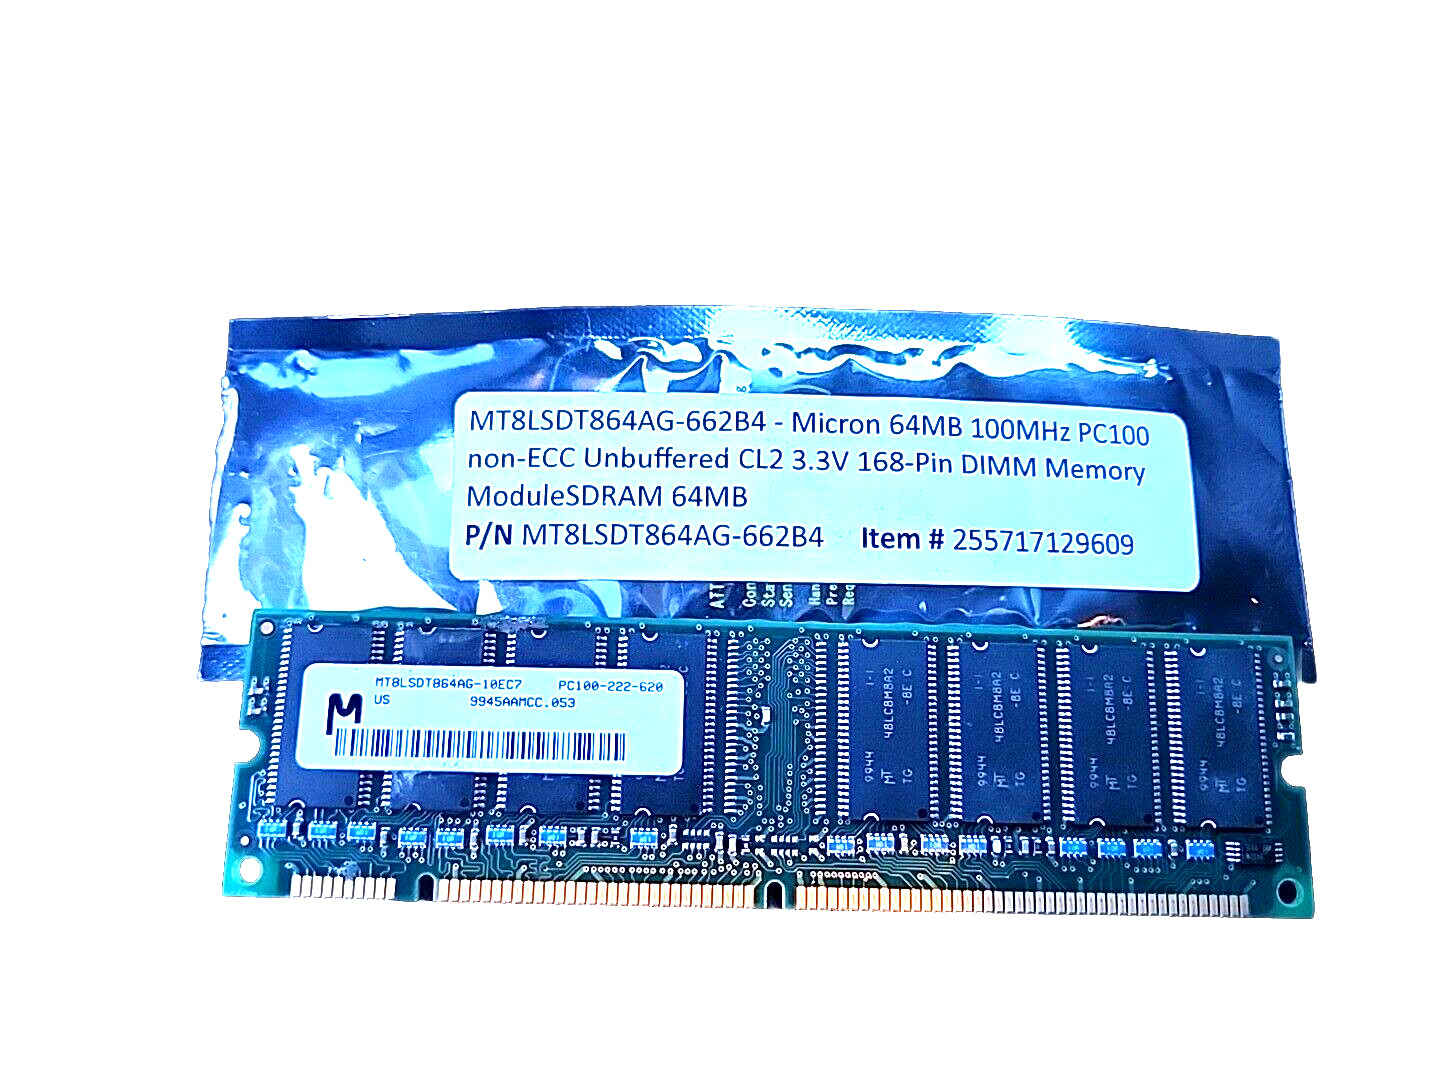 Micron 64MB 100MHz PC100 non-ECC Unbuffered  for sale,  P/N: MT8LSDT864AG-662B4